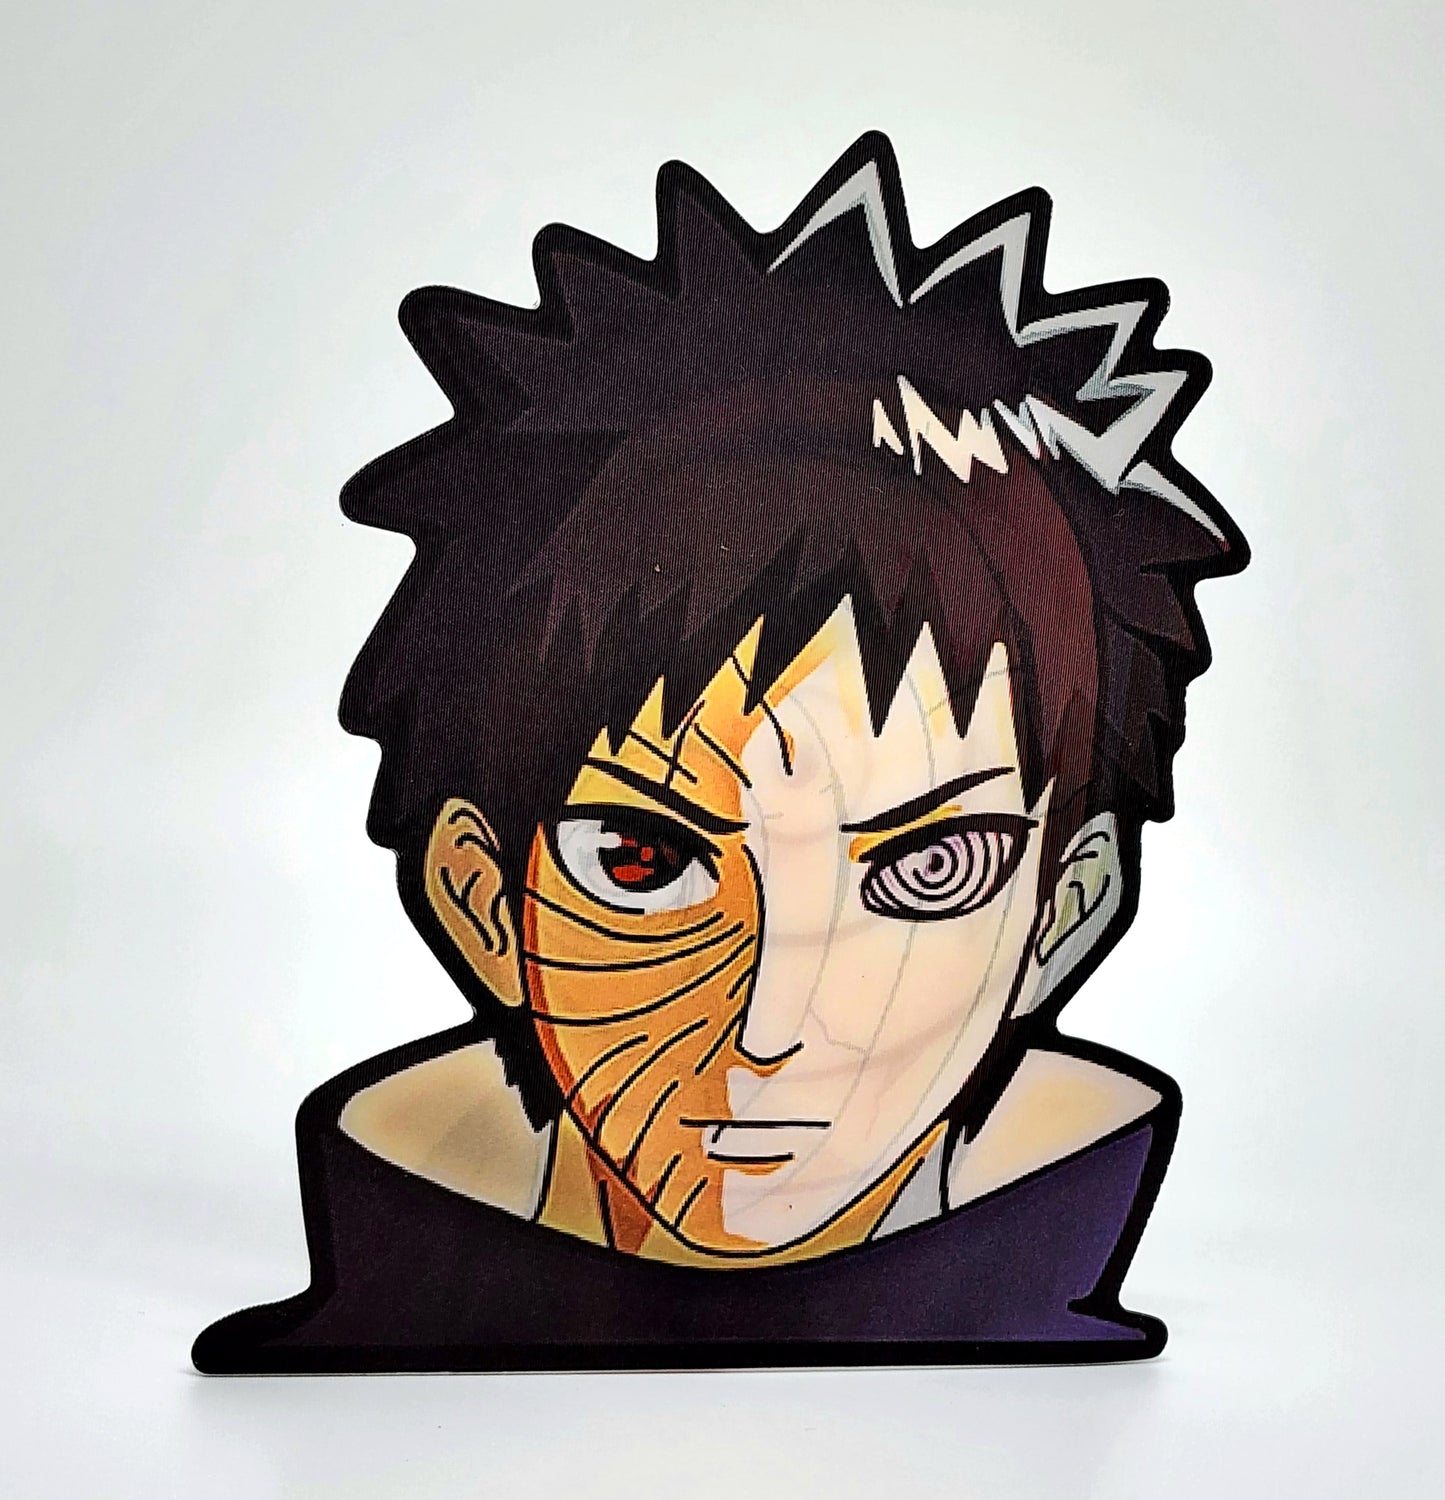 Obito Uchiha (Naruto) Motion Sticker